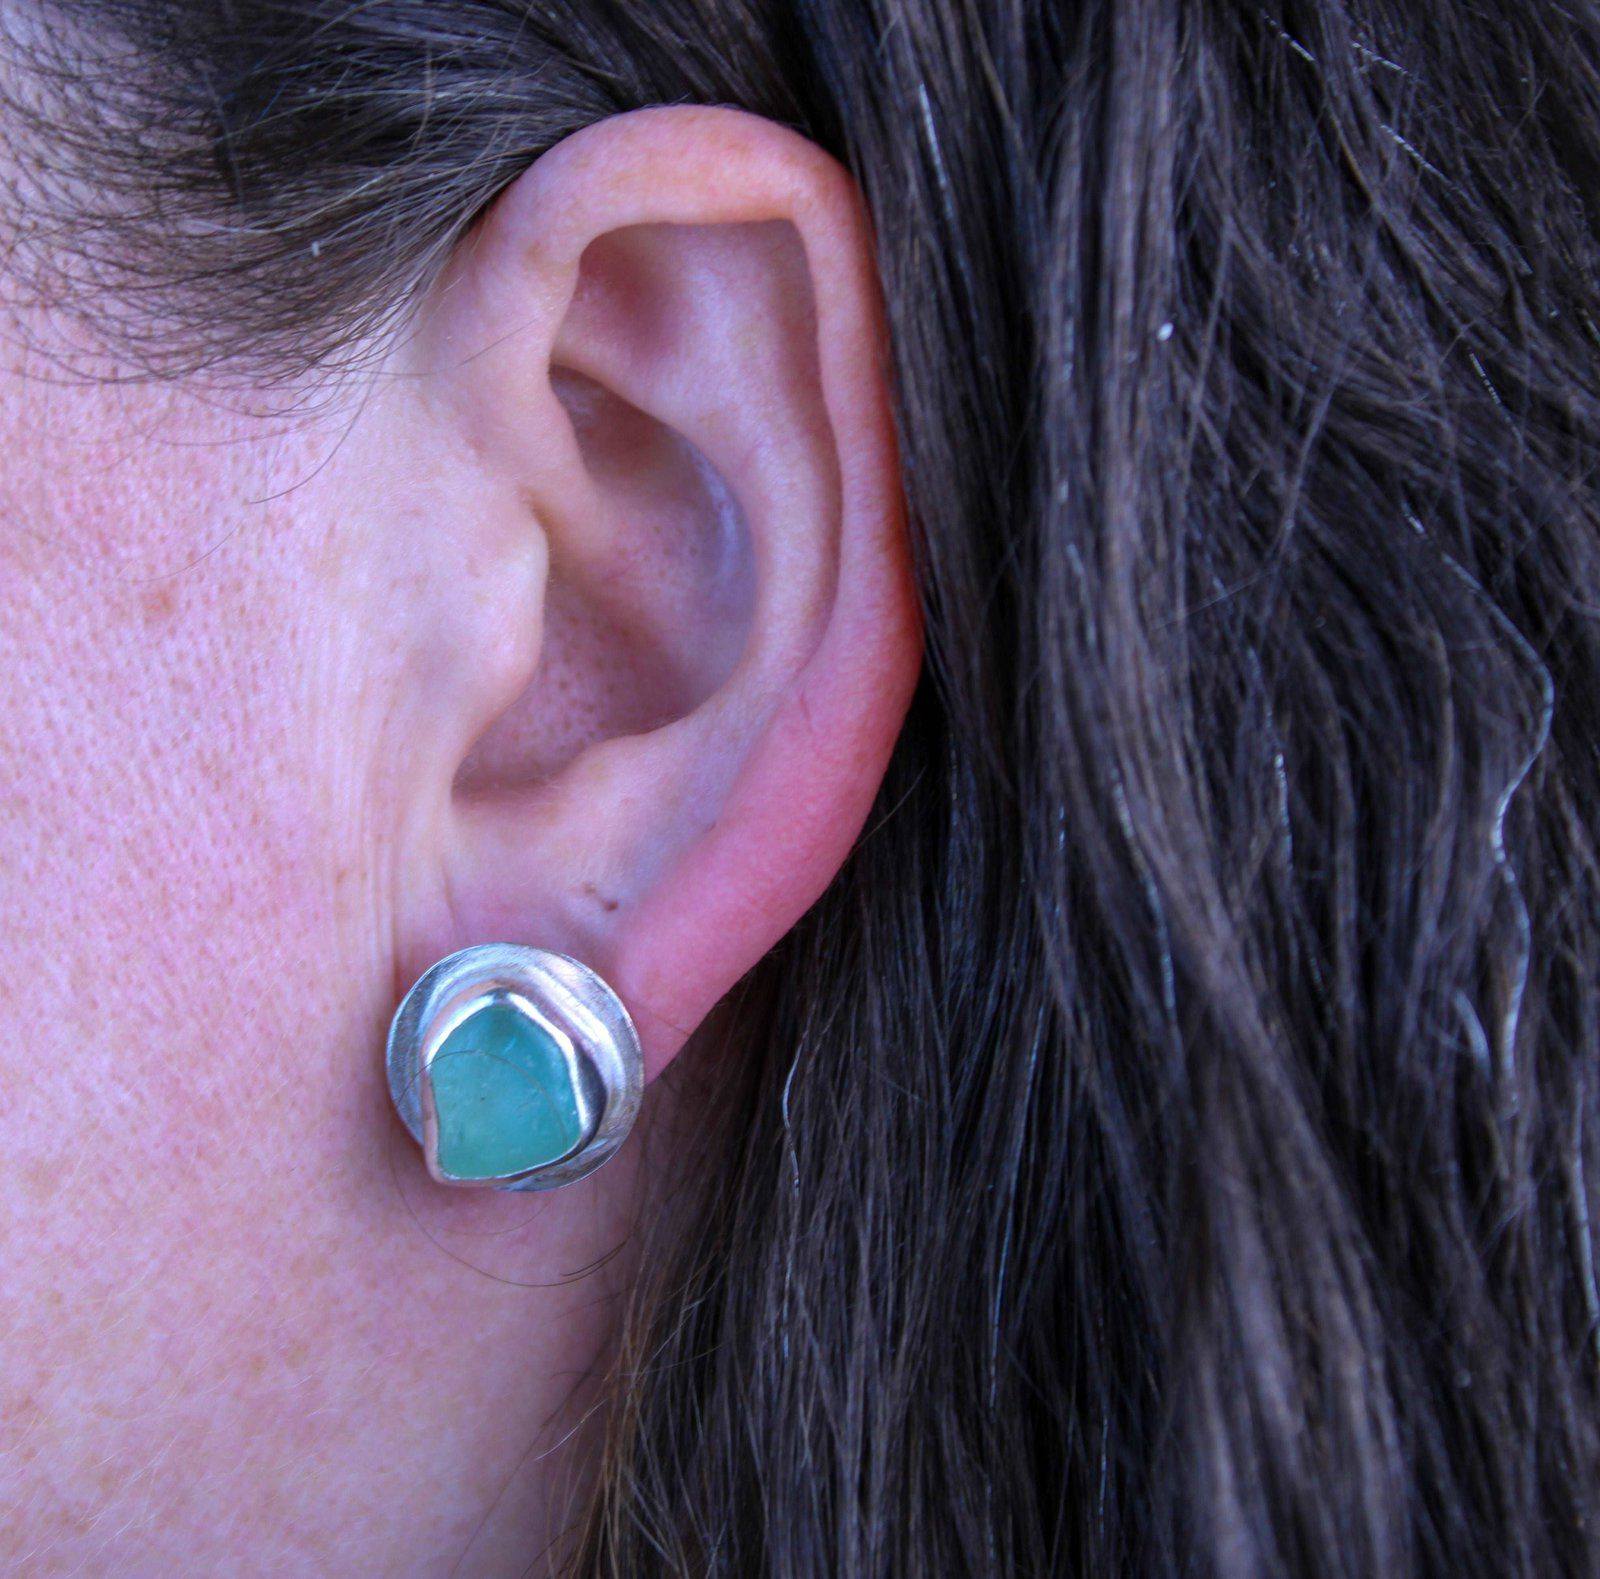 Turquoise sea glass stud earrings | Louella Jewellery